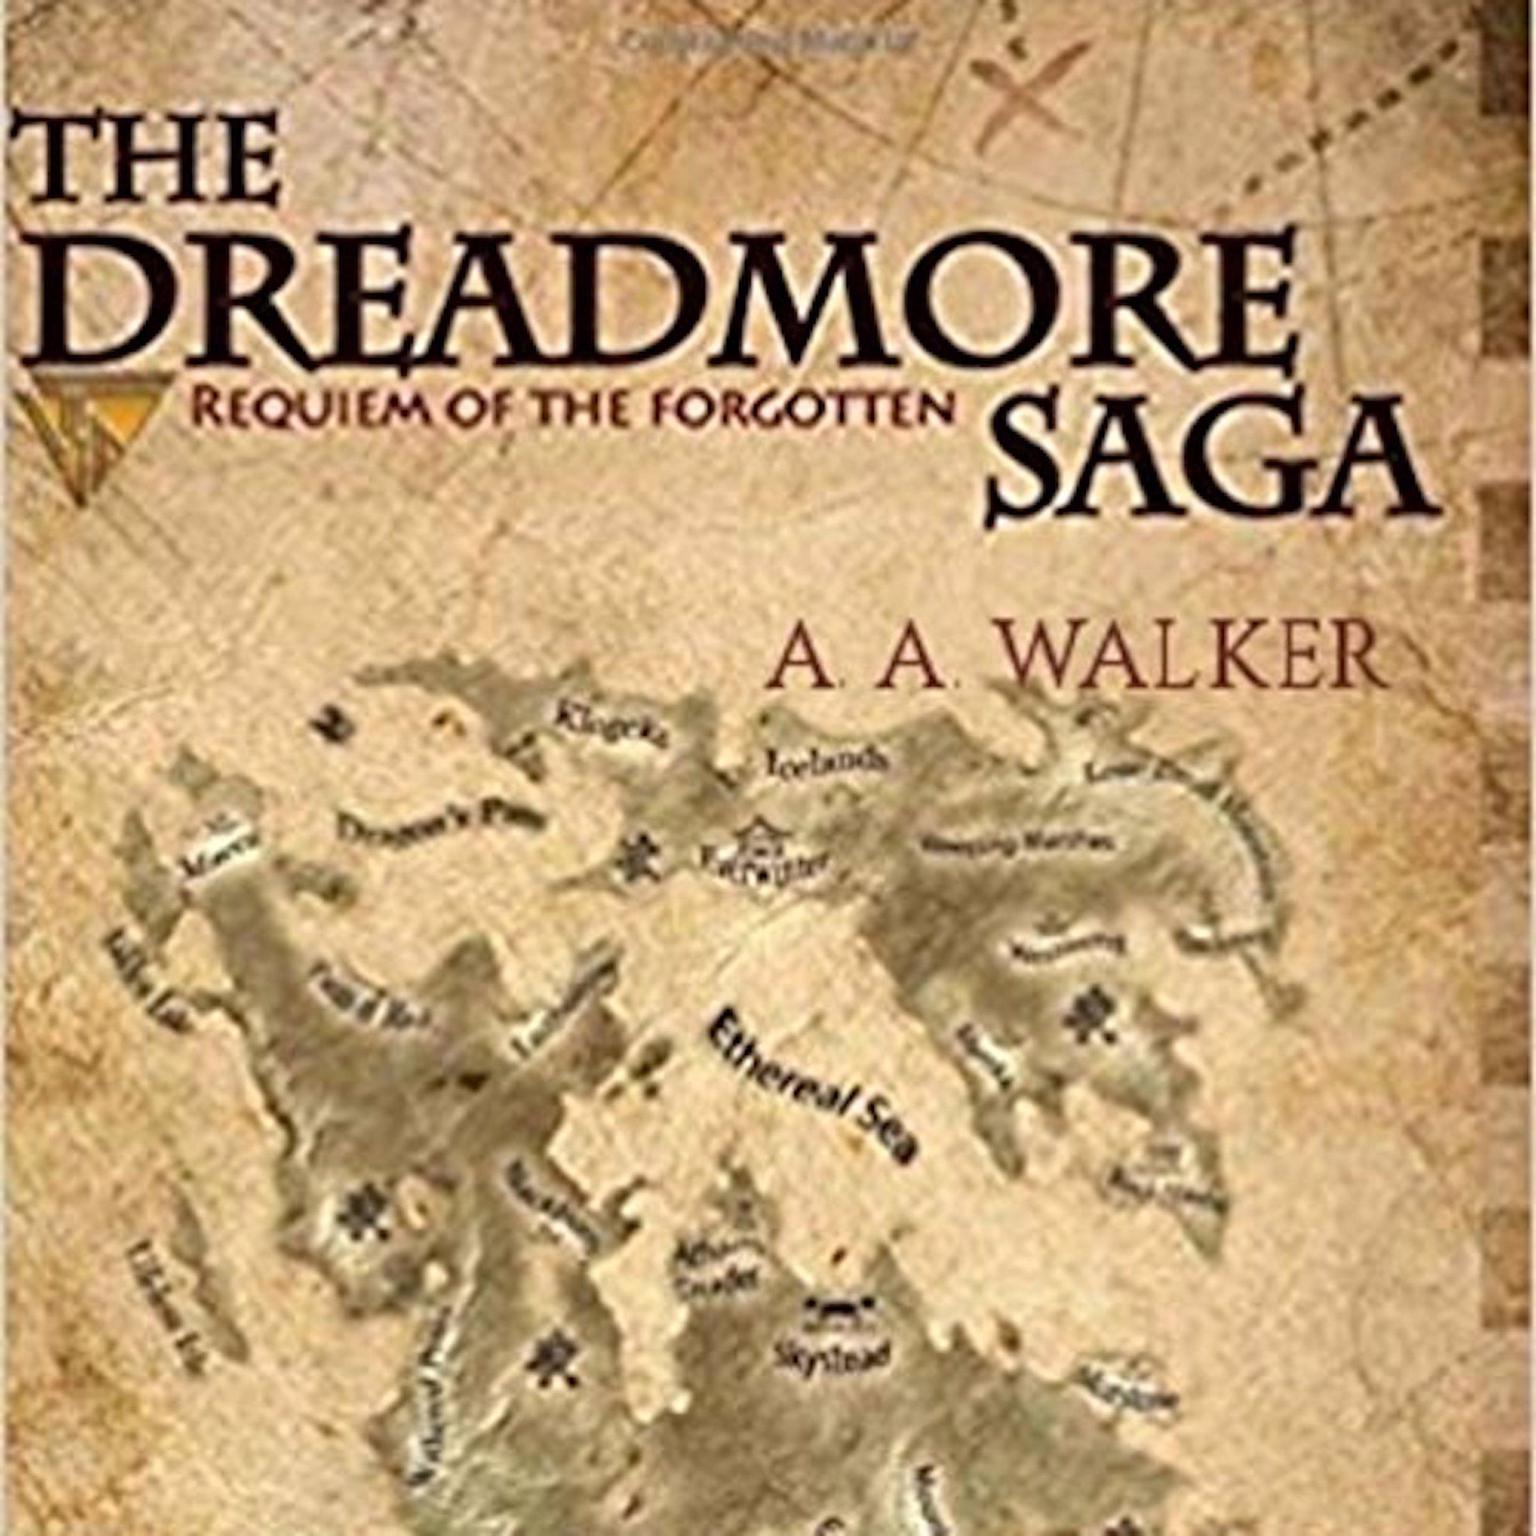 The Dreadmore Saga - Book 1: Requiem of the Forgotten Audiobook, by A.A. Walker